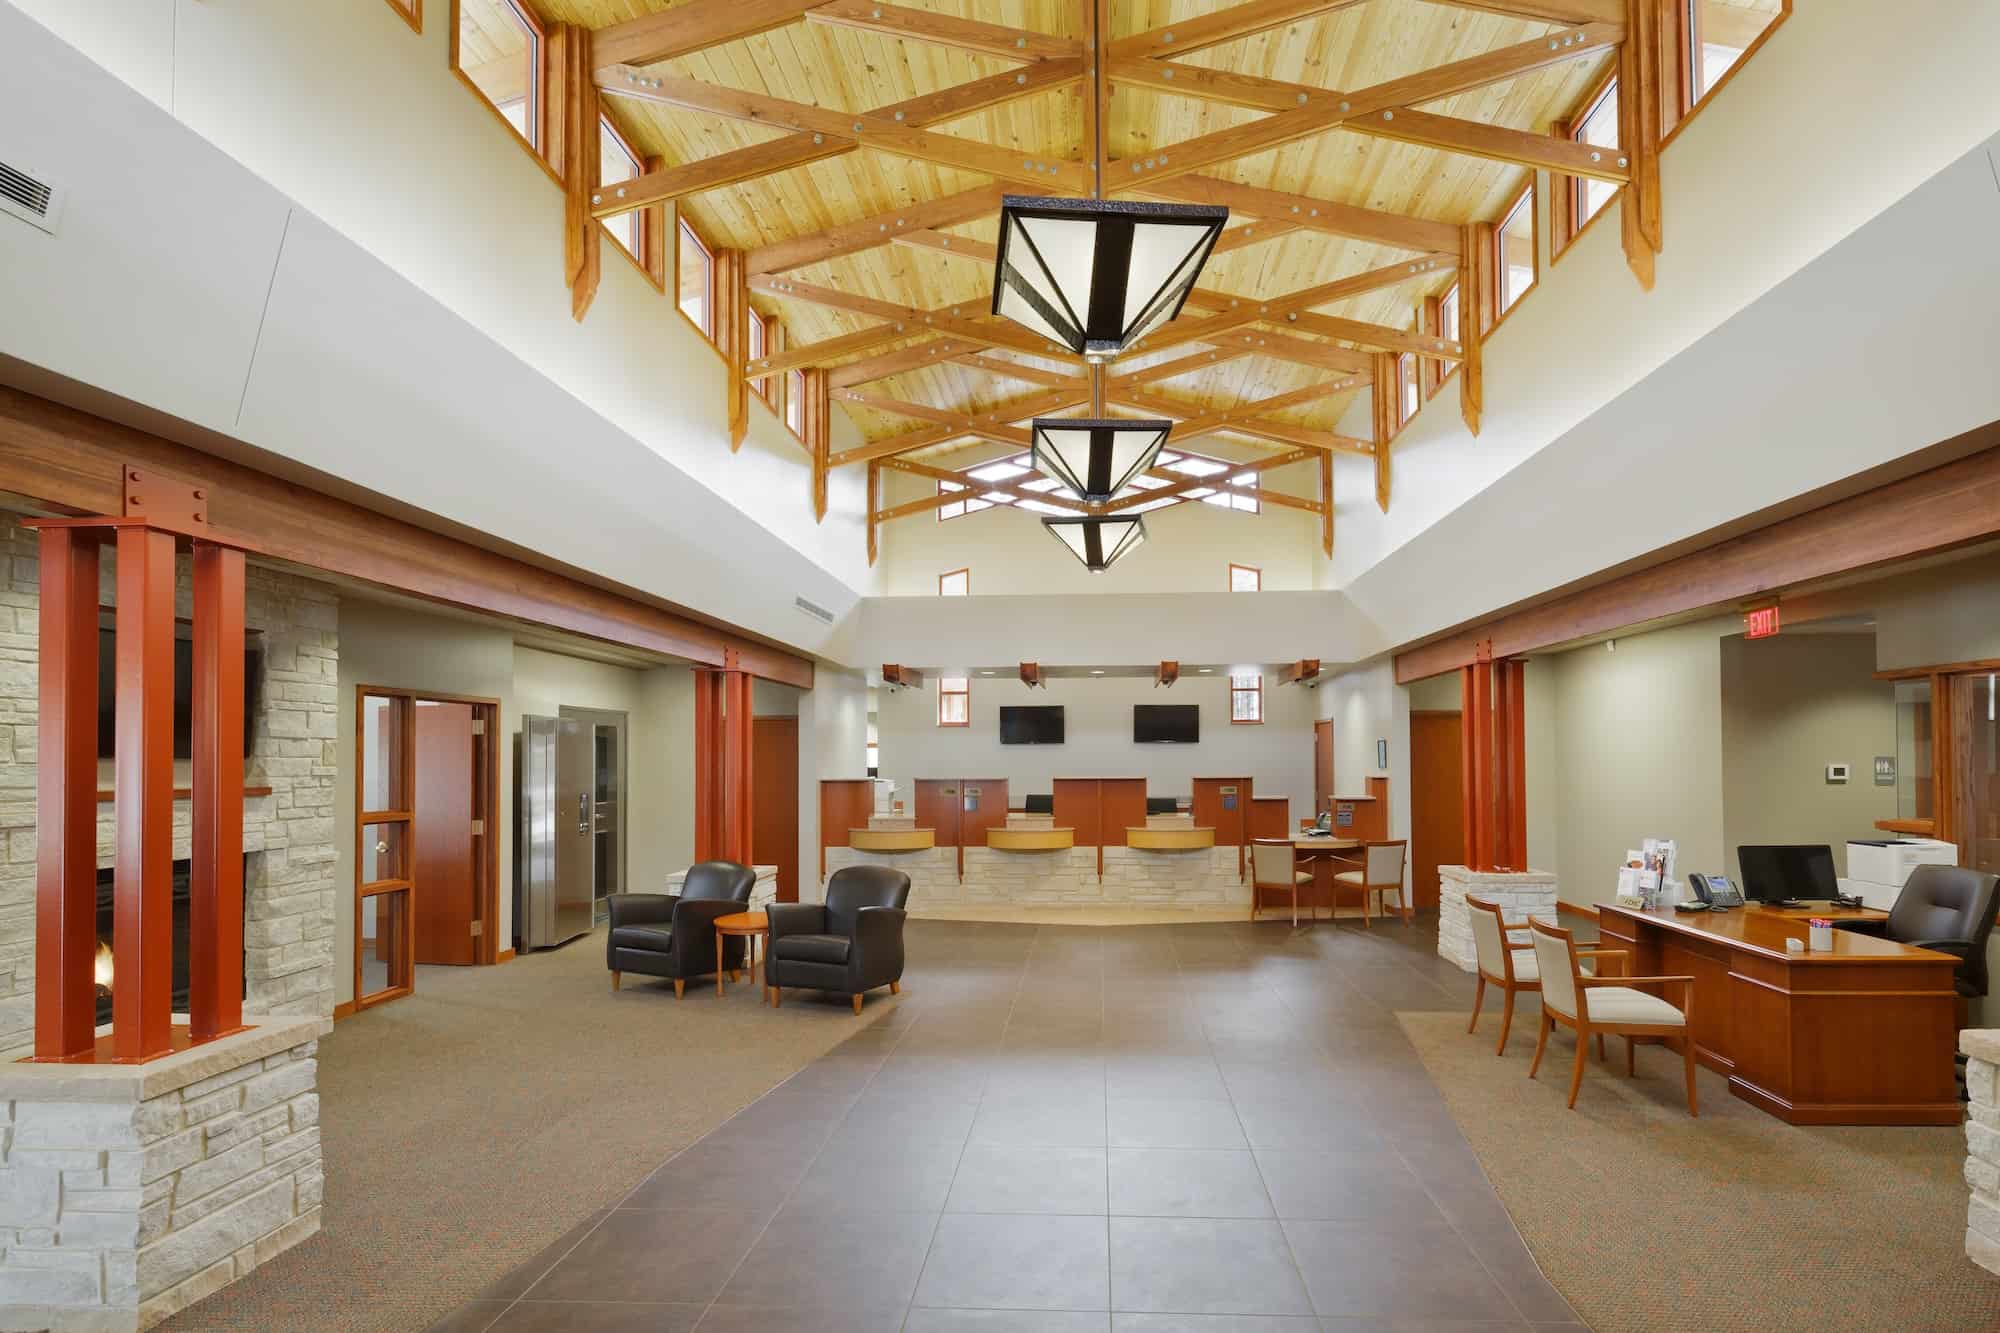 First Bank - interior lobby